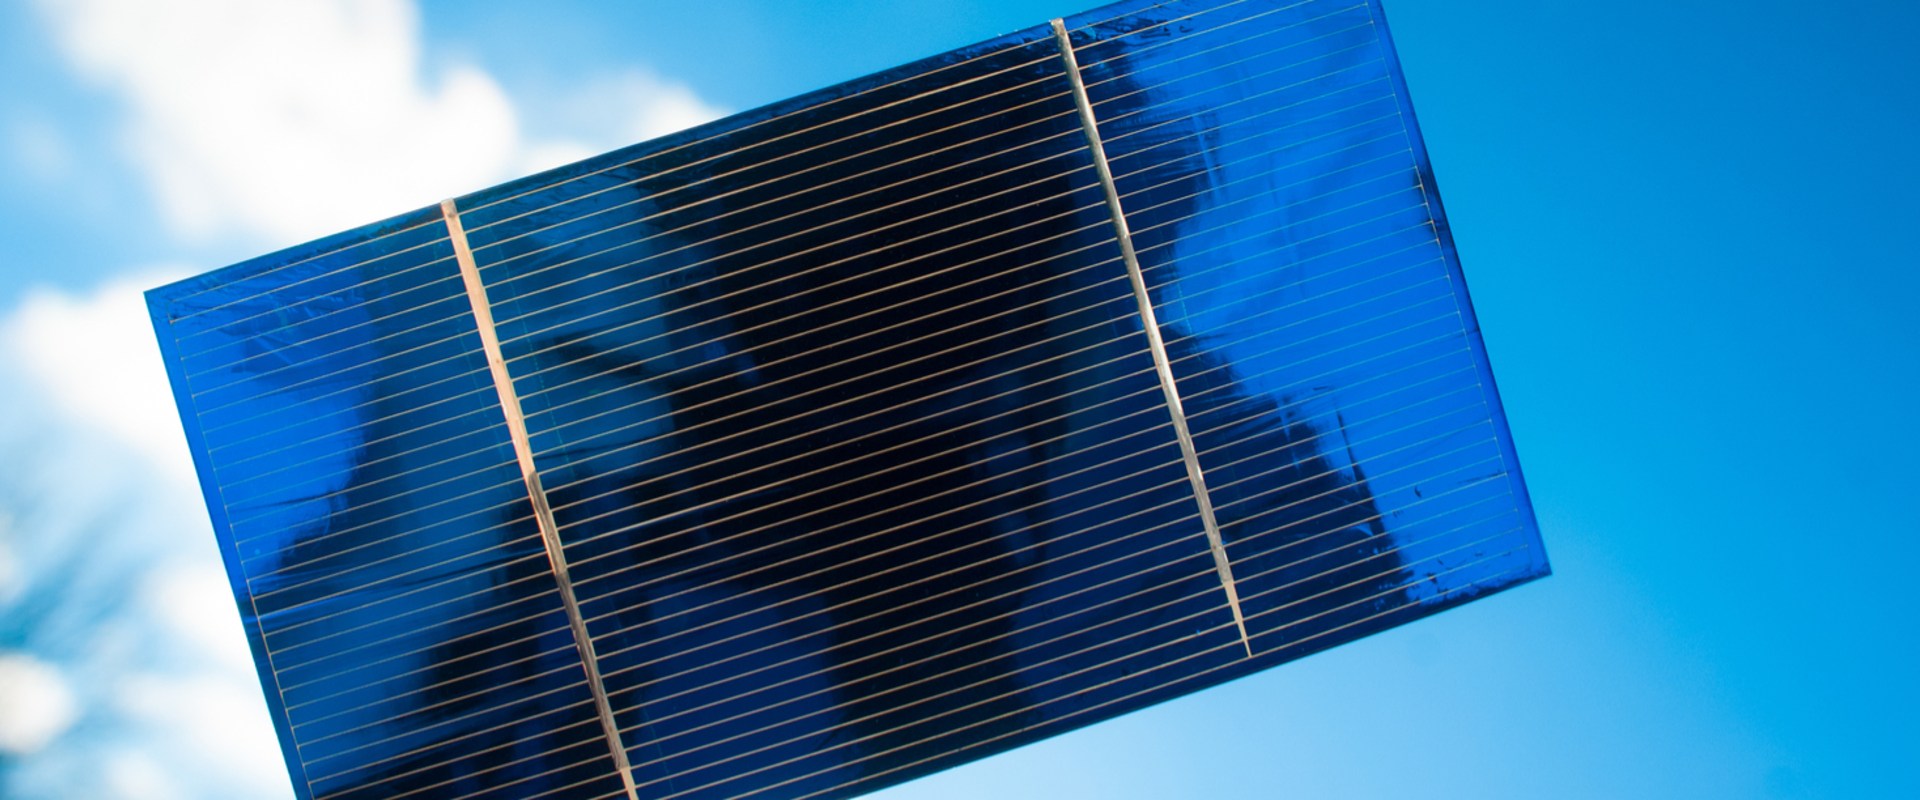 Can solar panels last 50 years?